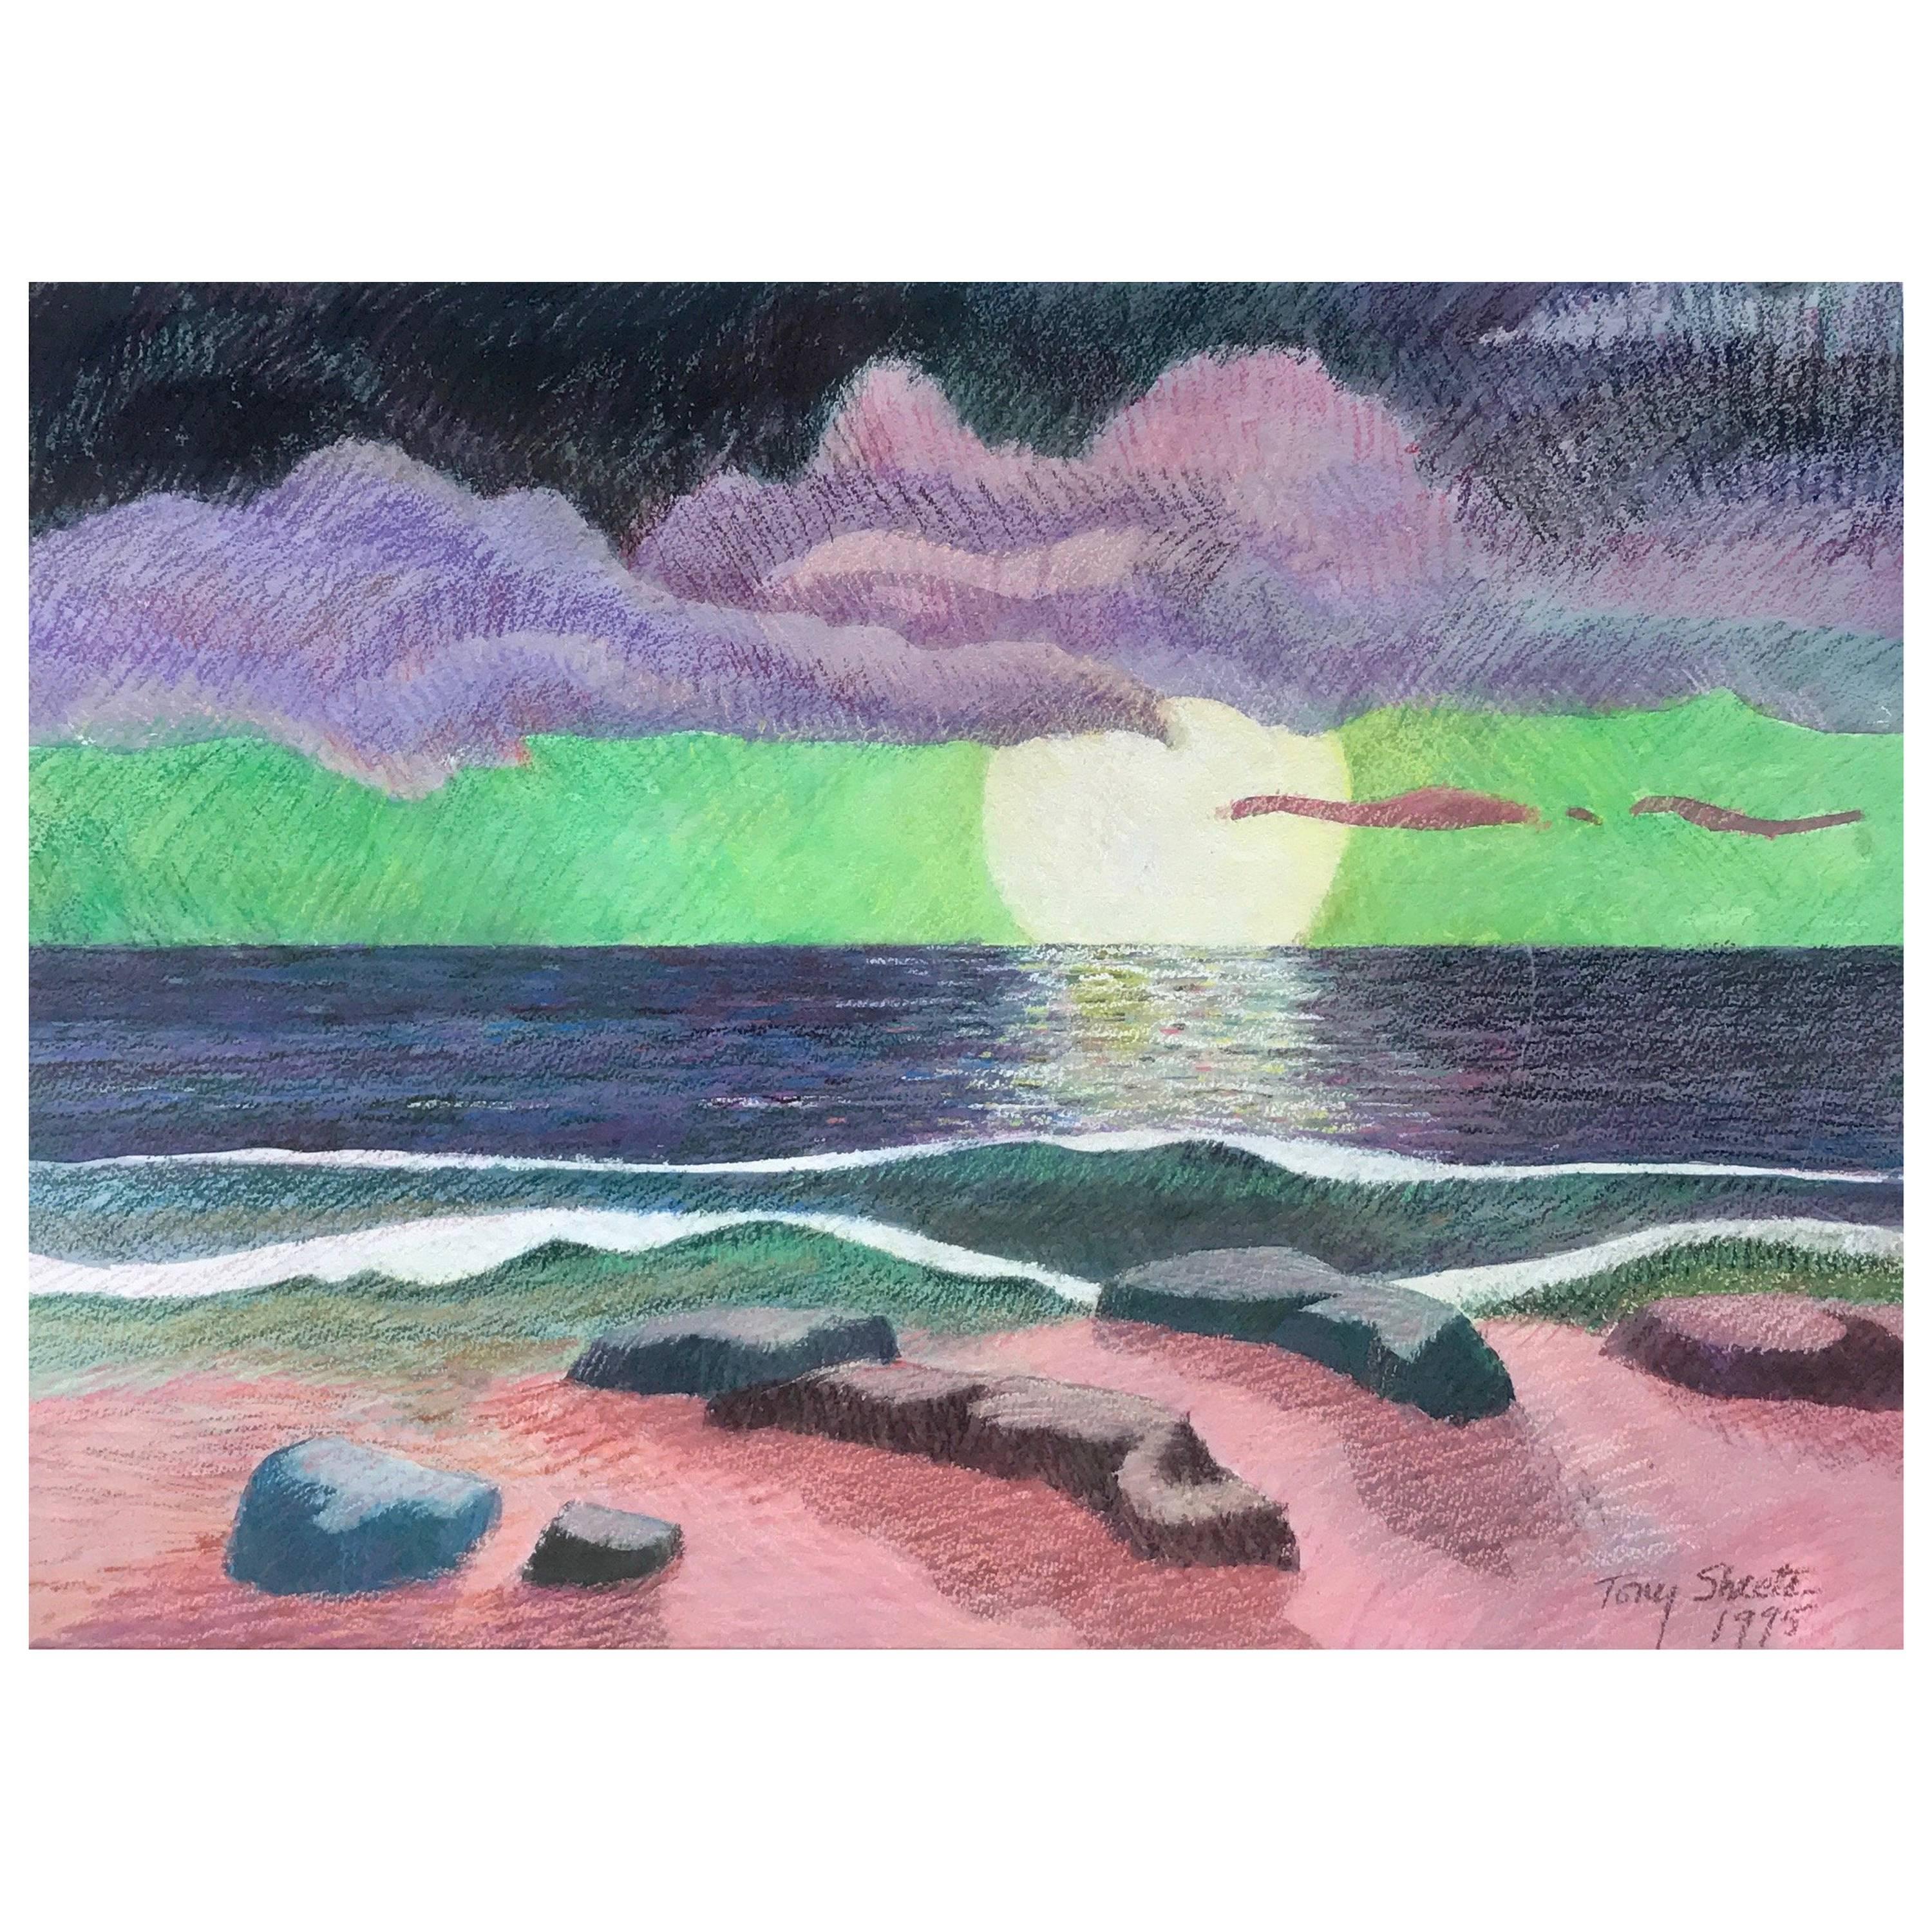 Tony Sheets “Molokai Dream” 1995, Signed For Sale